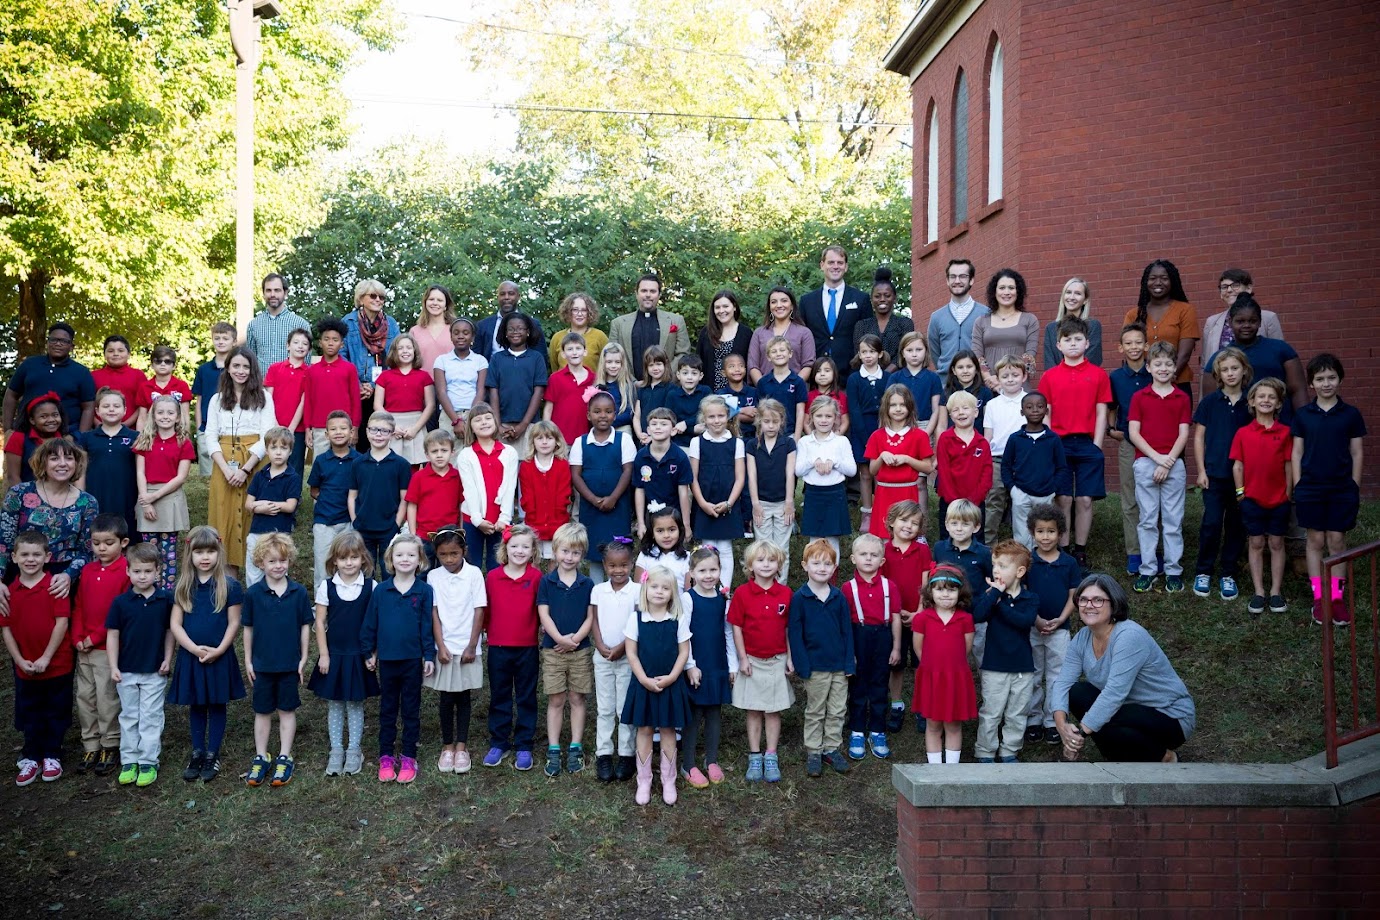 Episcopal School of Nashville